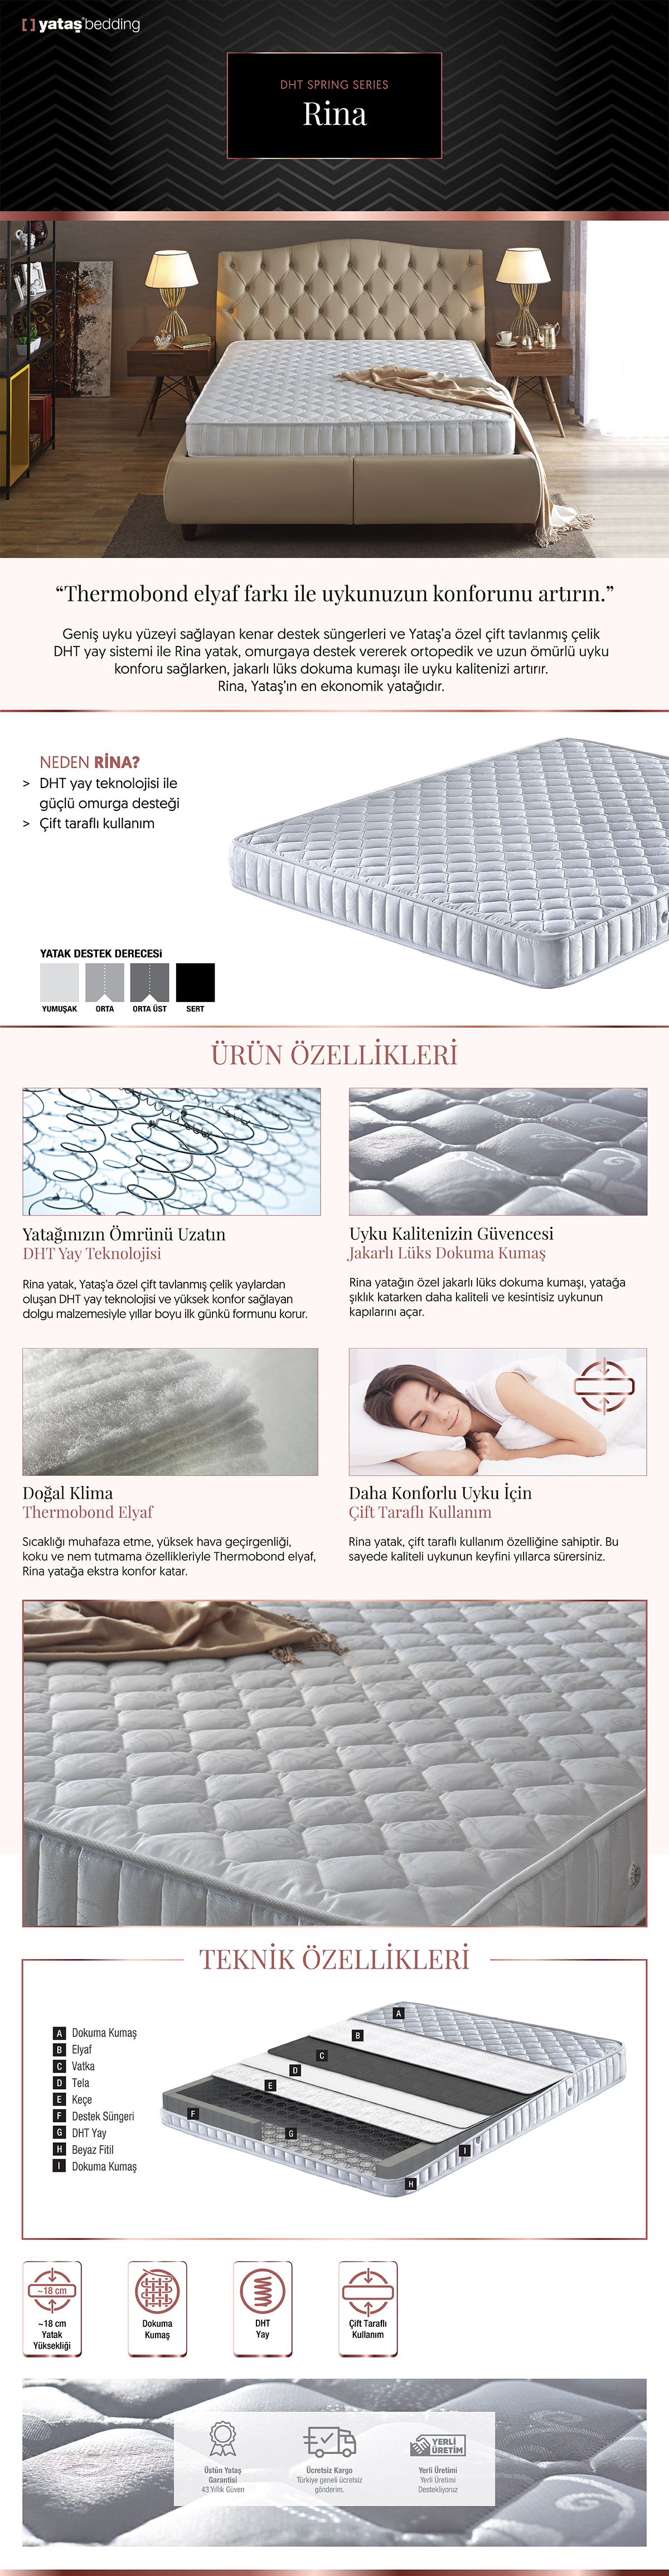 Yataş Bedding RINA DHT Yaylı Seri Yatak (Çift Kişilik Fiyatı